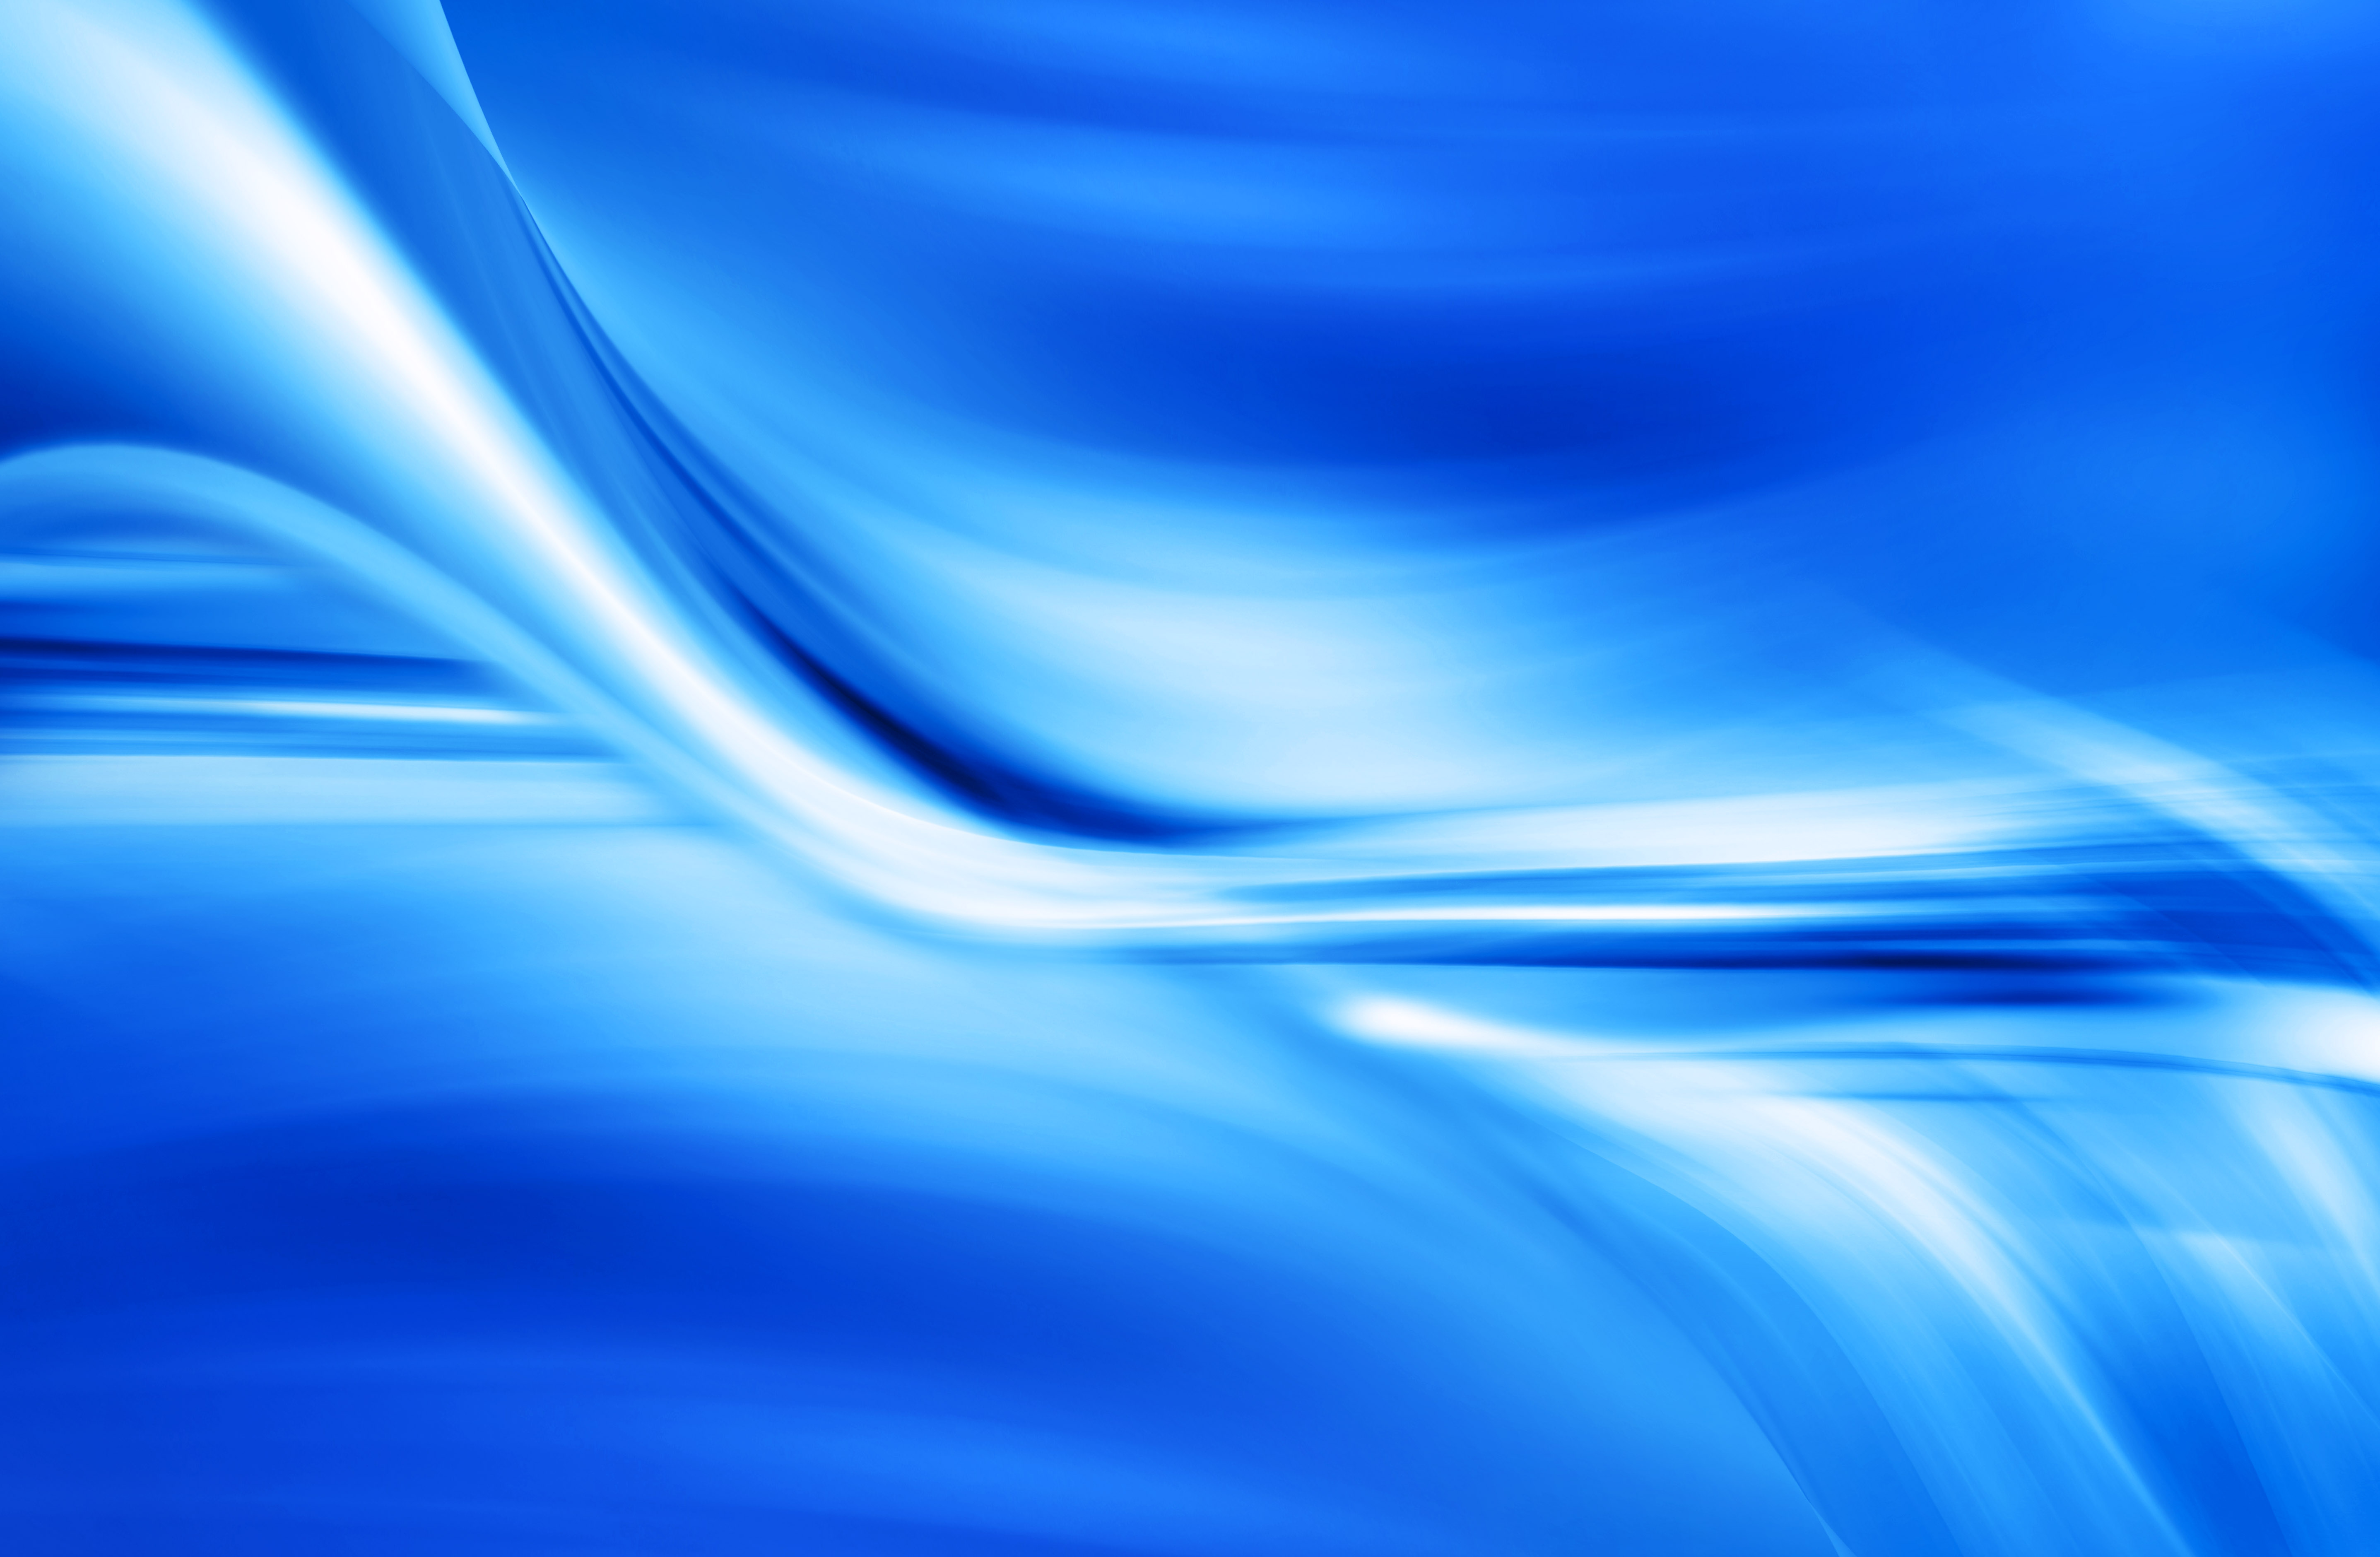 light blue background texture